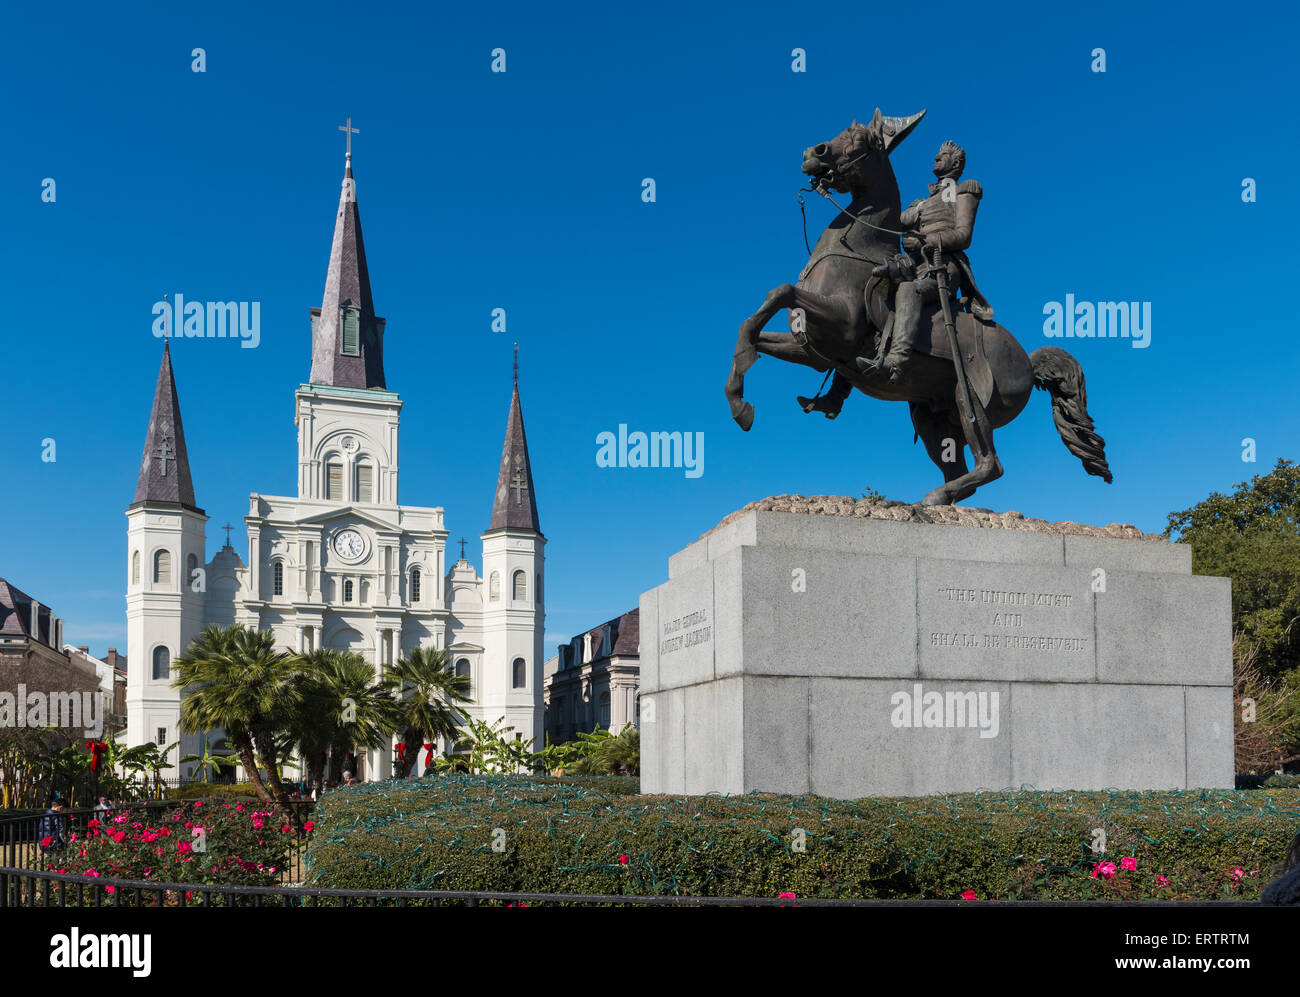 St. Louis Cathedral, New Orleans mit der Statue von Major General Andrew Jackson, Louisiana, USA Stockfoto